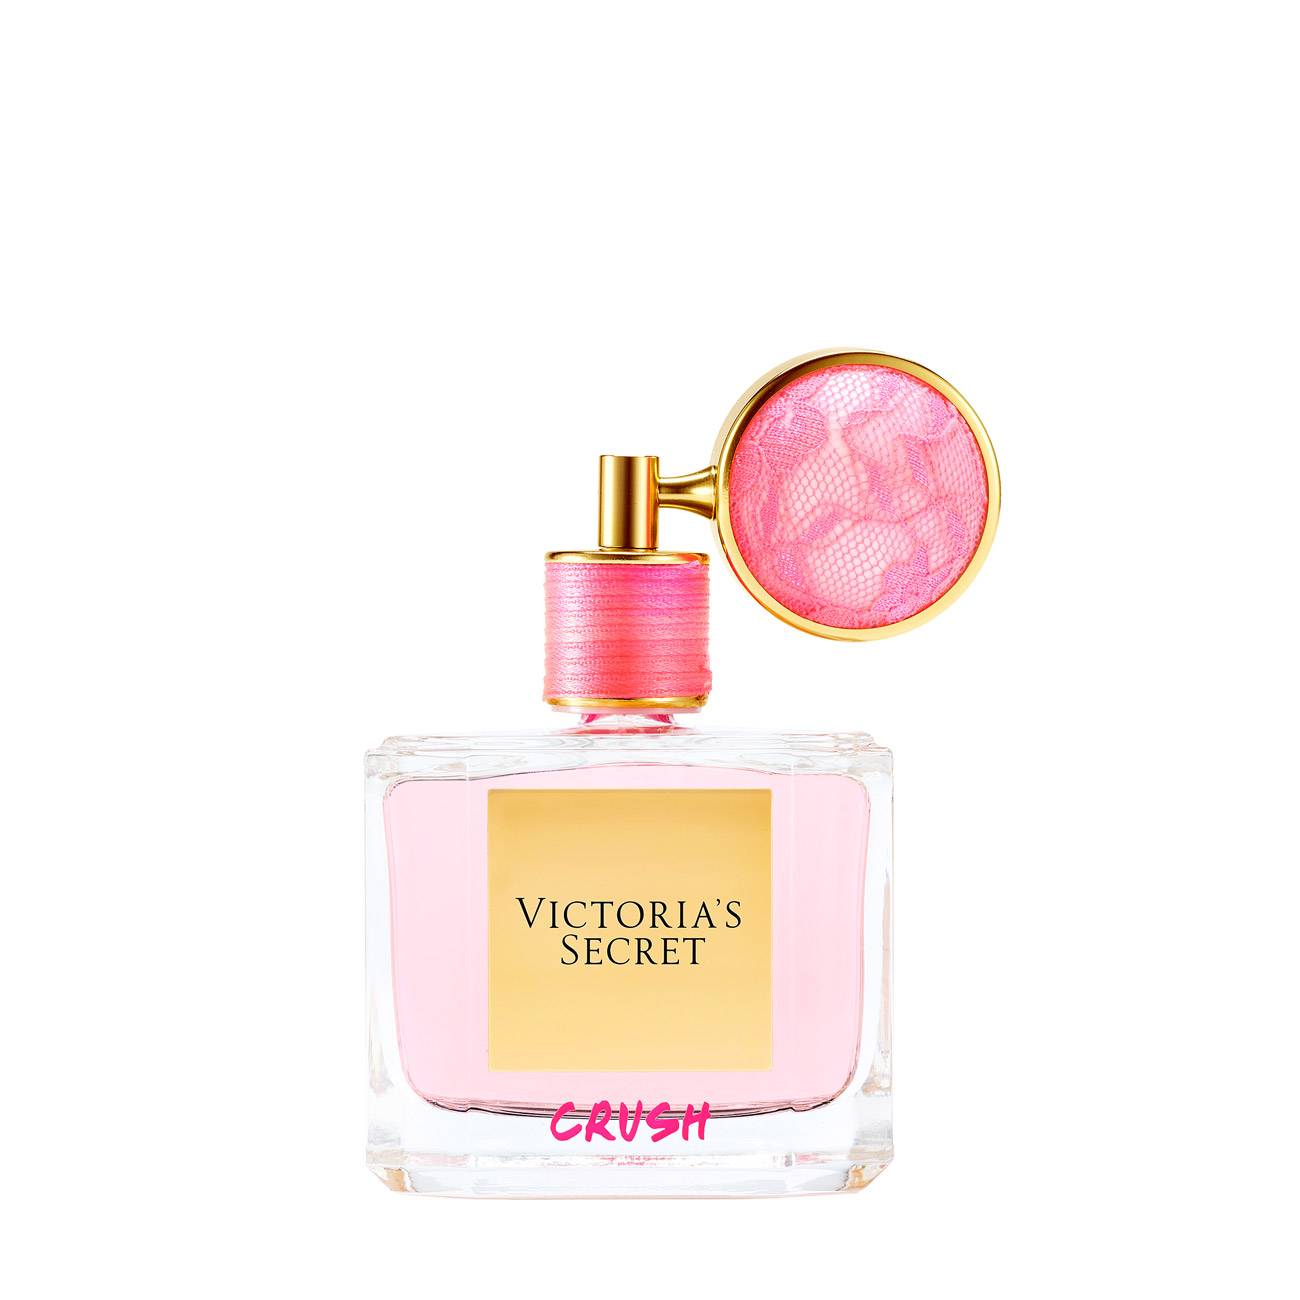 Apa de Parfum Victoria's Secret CRUSH 50ml cu comanda online